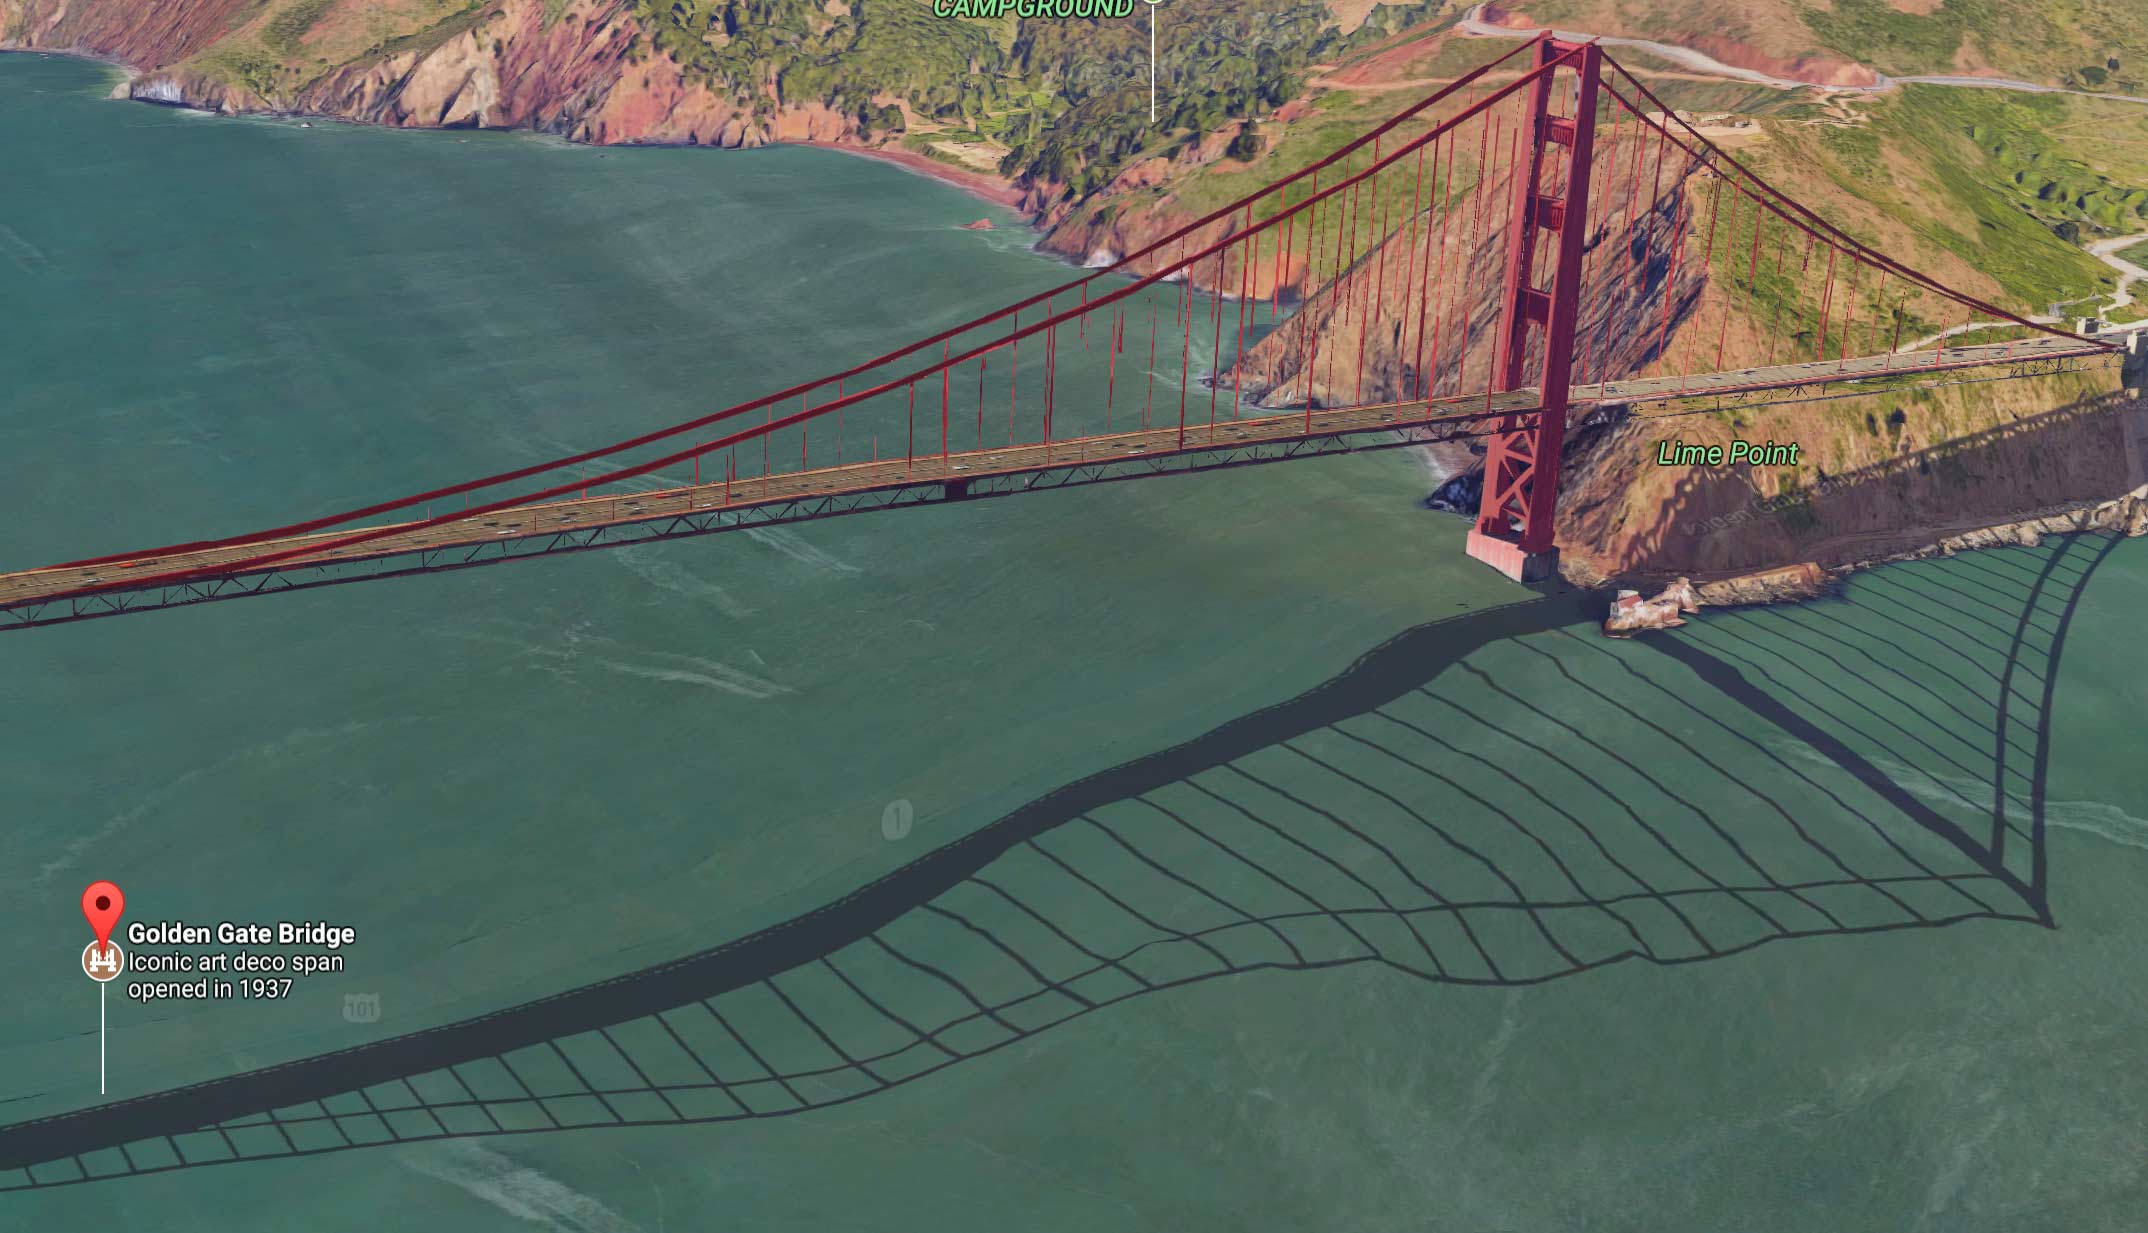 Golden Gate Bridge in 2017